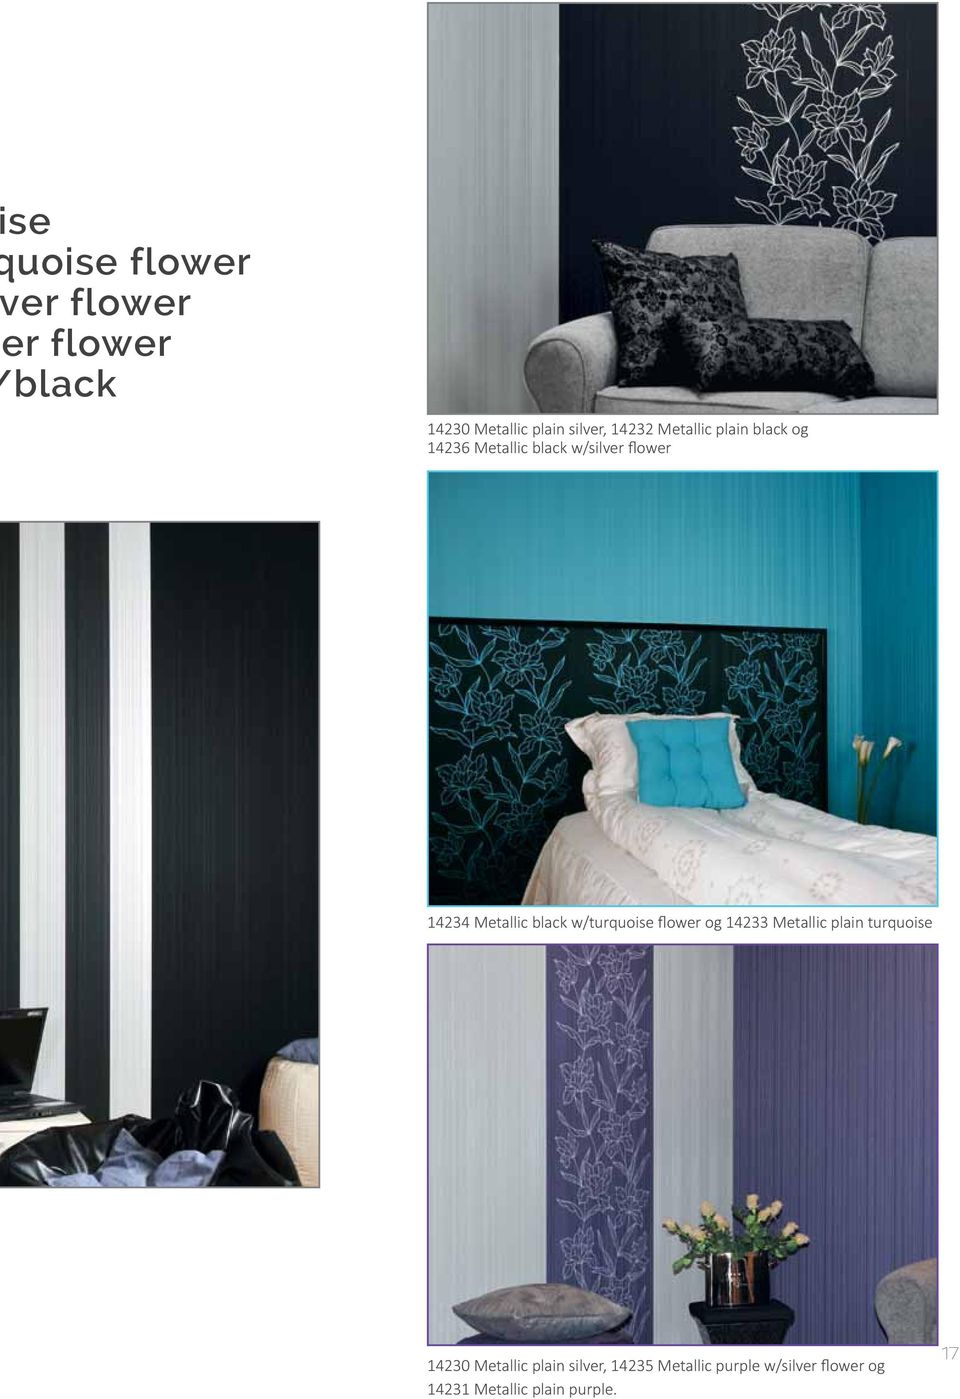 black w/turquoise flower og 14233 Metallic plain turquoise 14230 Metallic